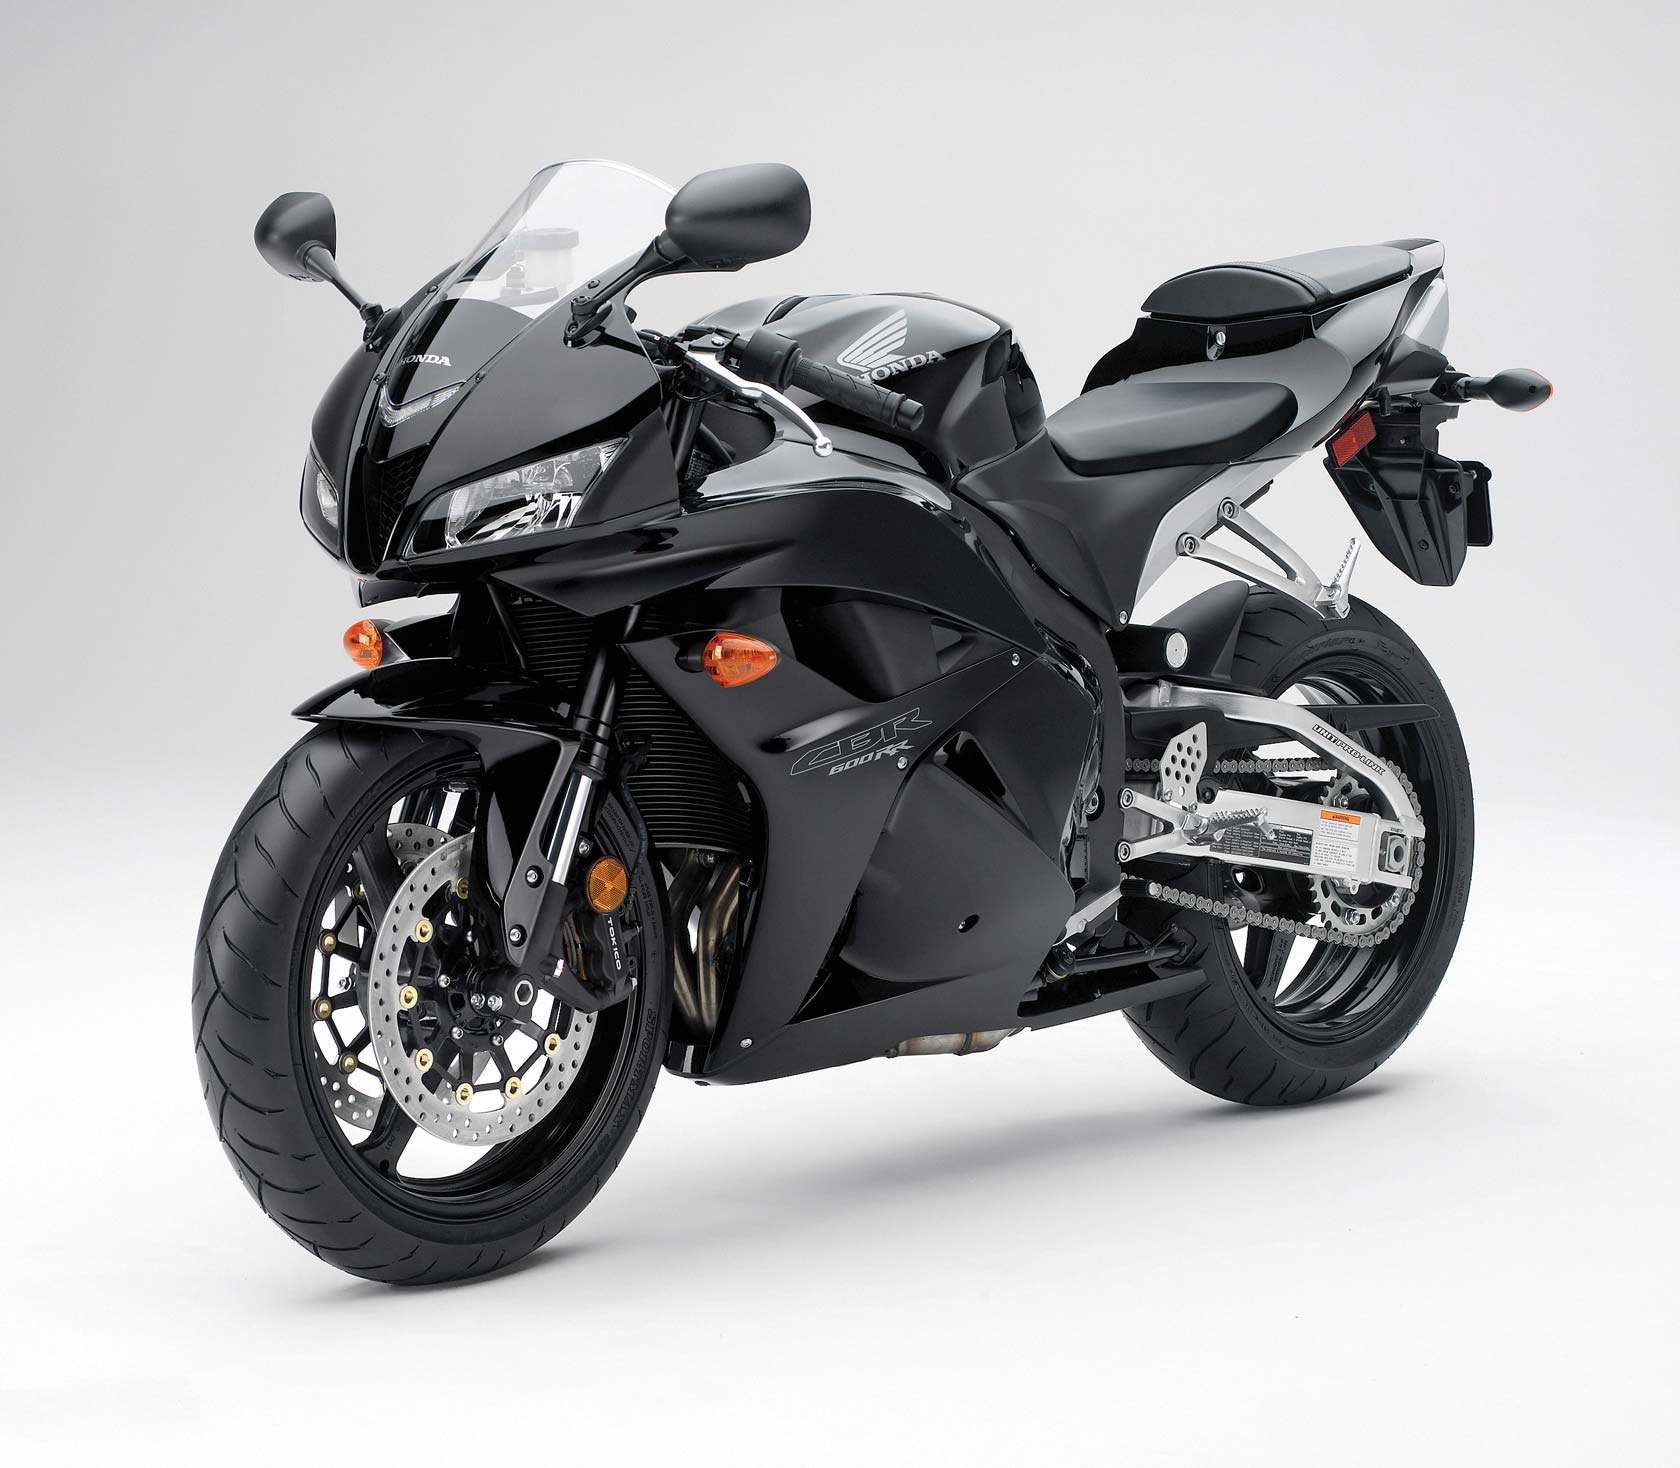 Honda Cbr600rr Motorcycle 1680x1468